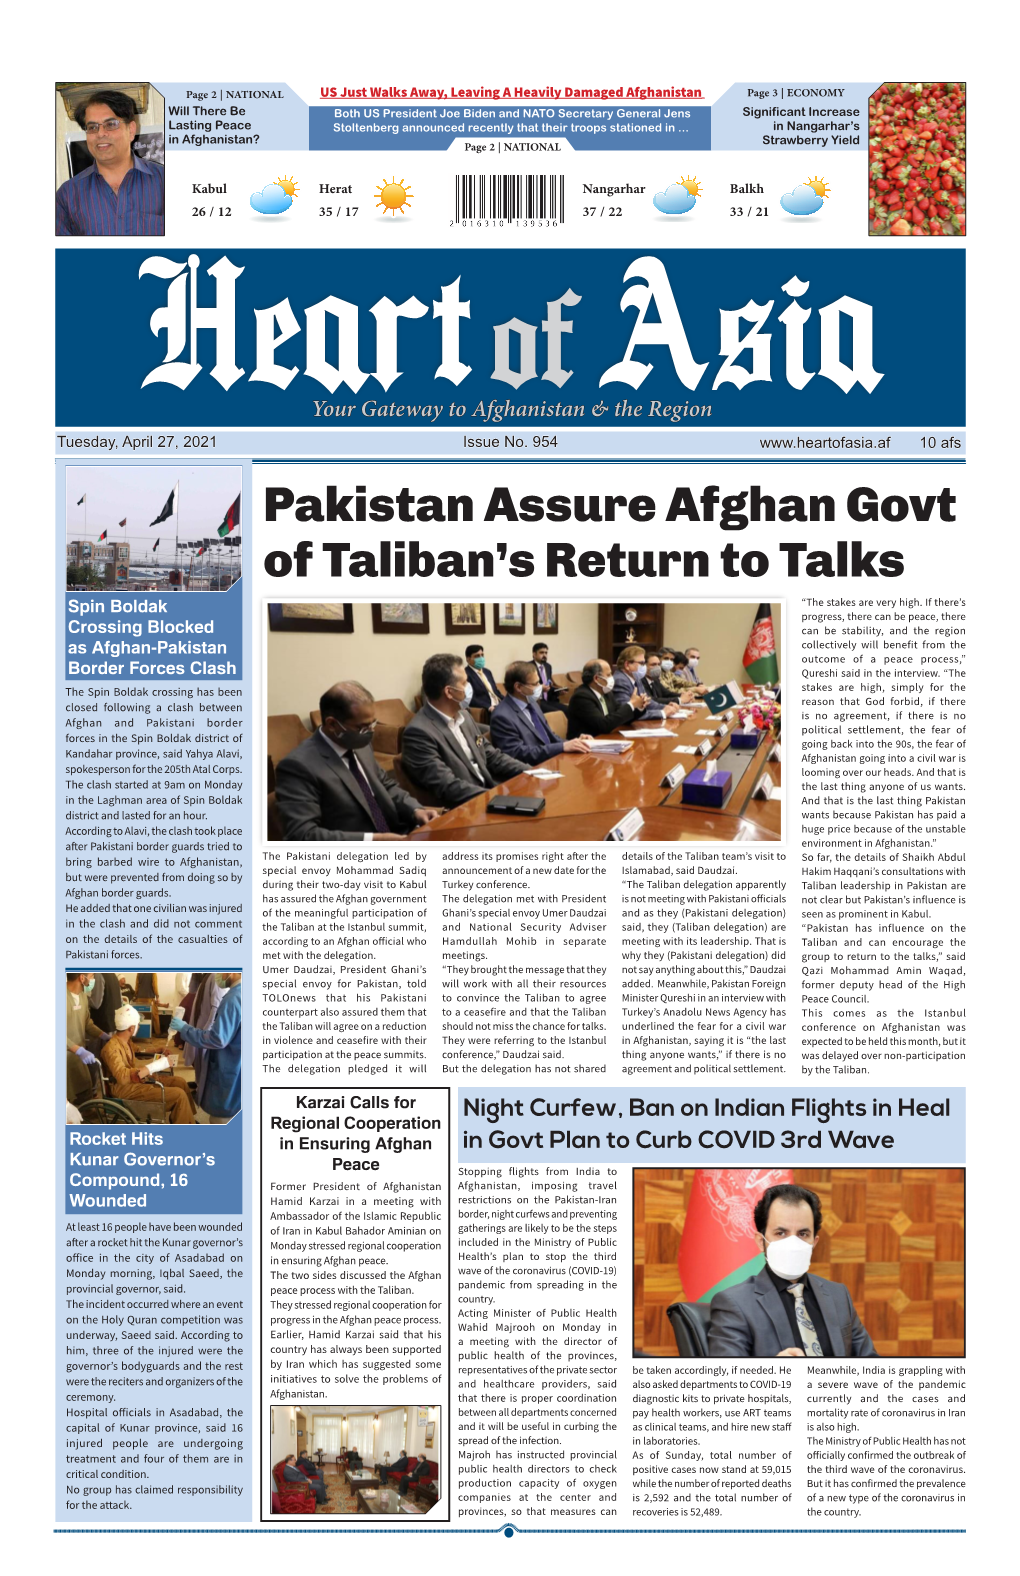 Pakistan Assure Afghan Govt of Taliban's Return to Talks